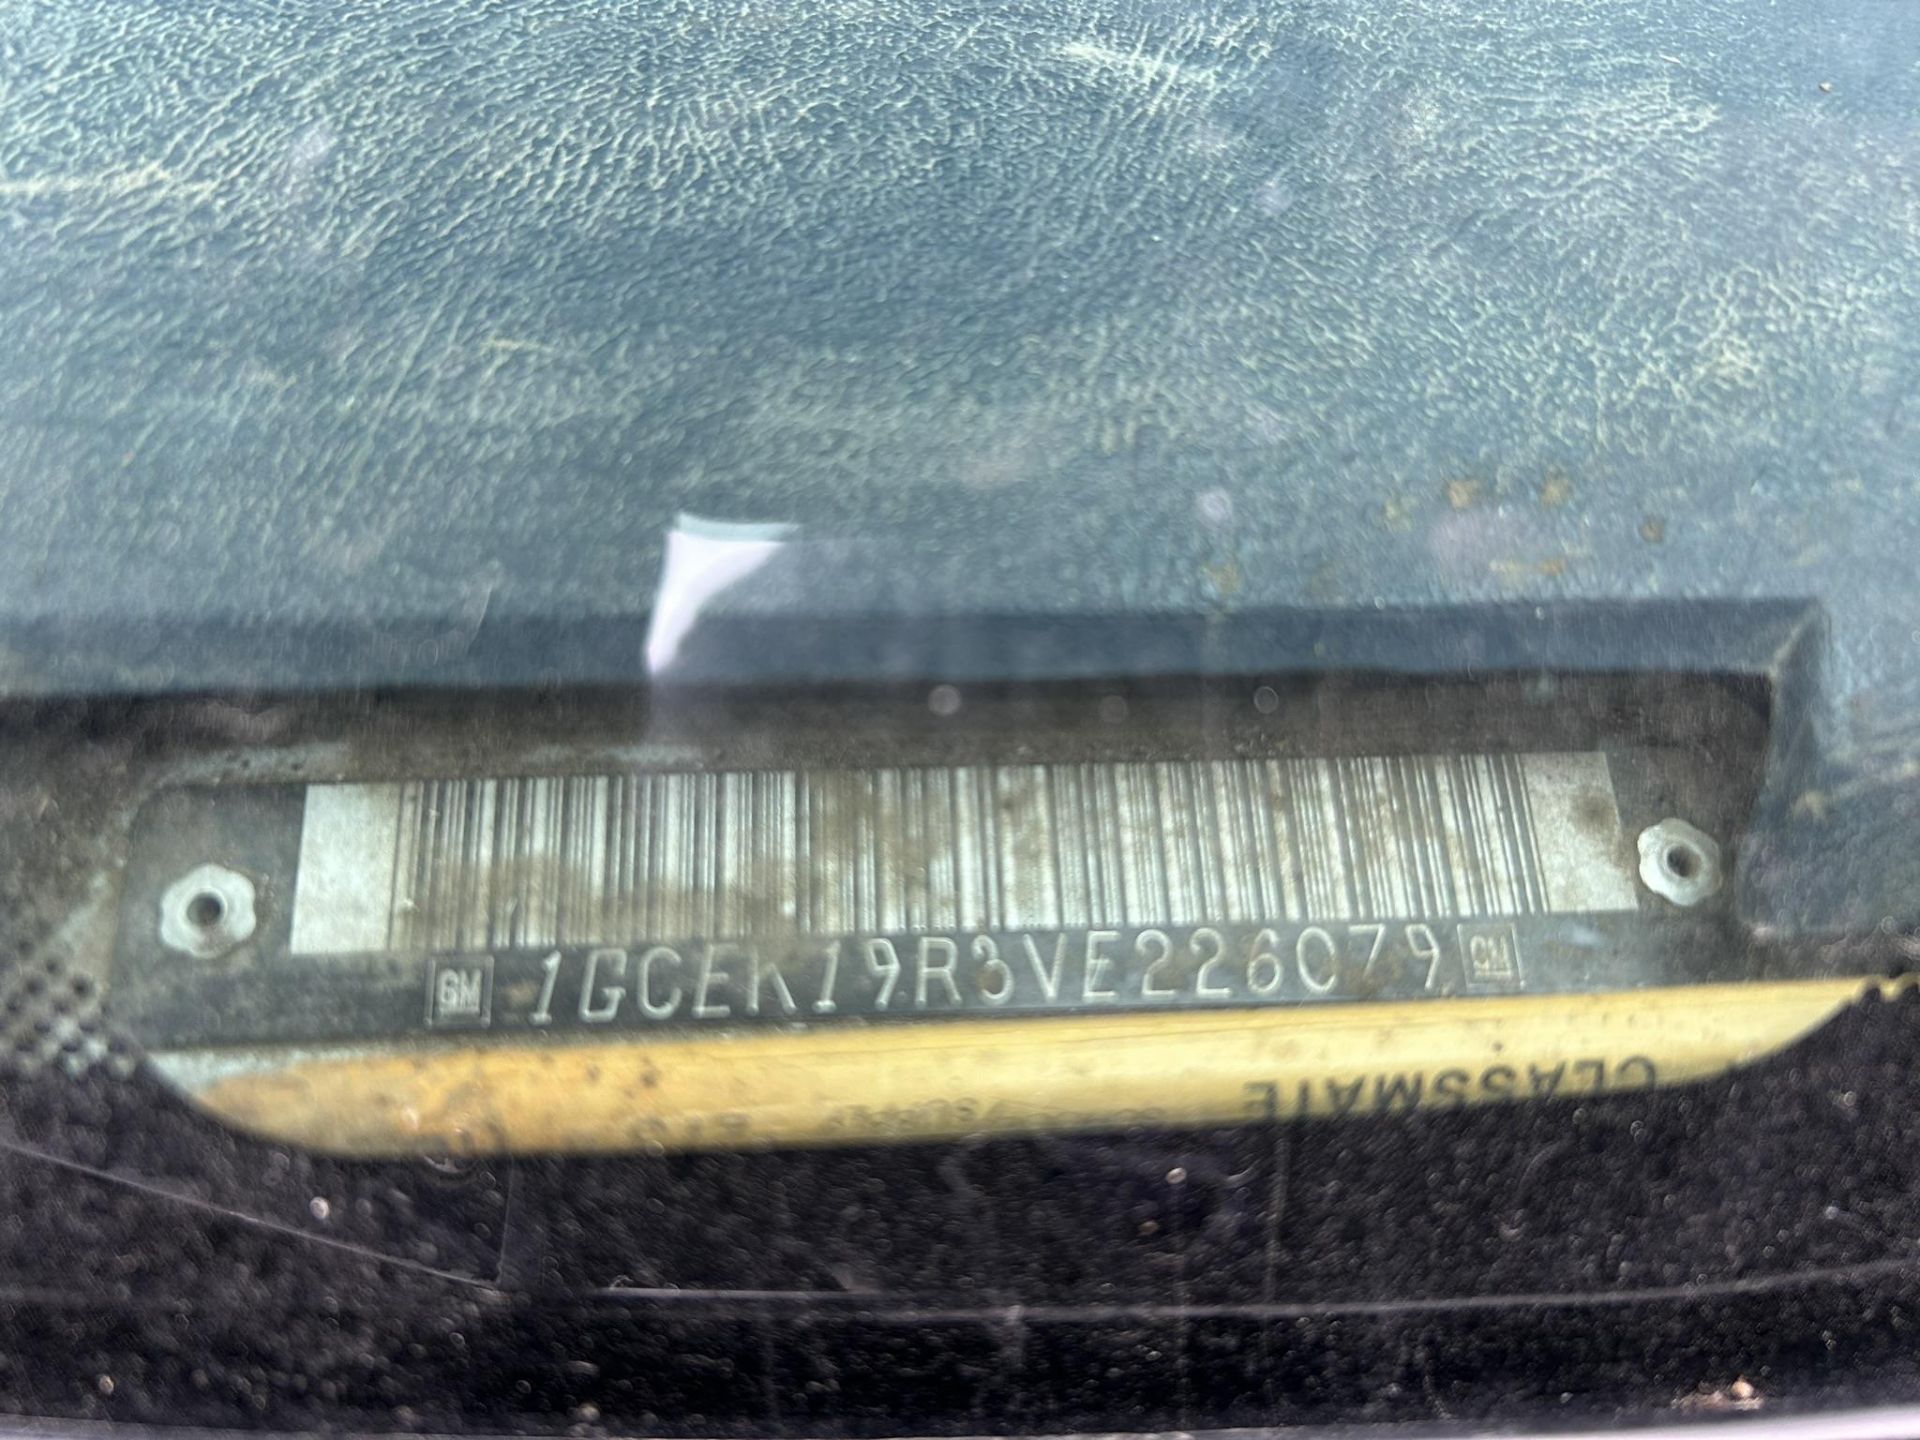 1997 CHEVEROLET 1500 SILVERADO P/U TRUCK, EXTENDED CAB, 5.7L V8 ENG., A/T, 4X4, AC, PW, TILT, - Image 9 of 10